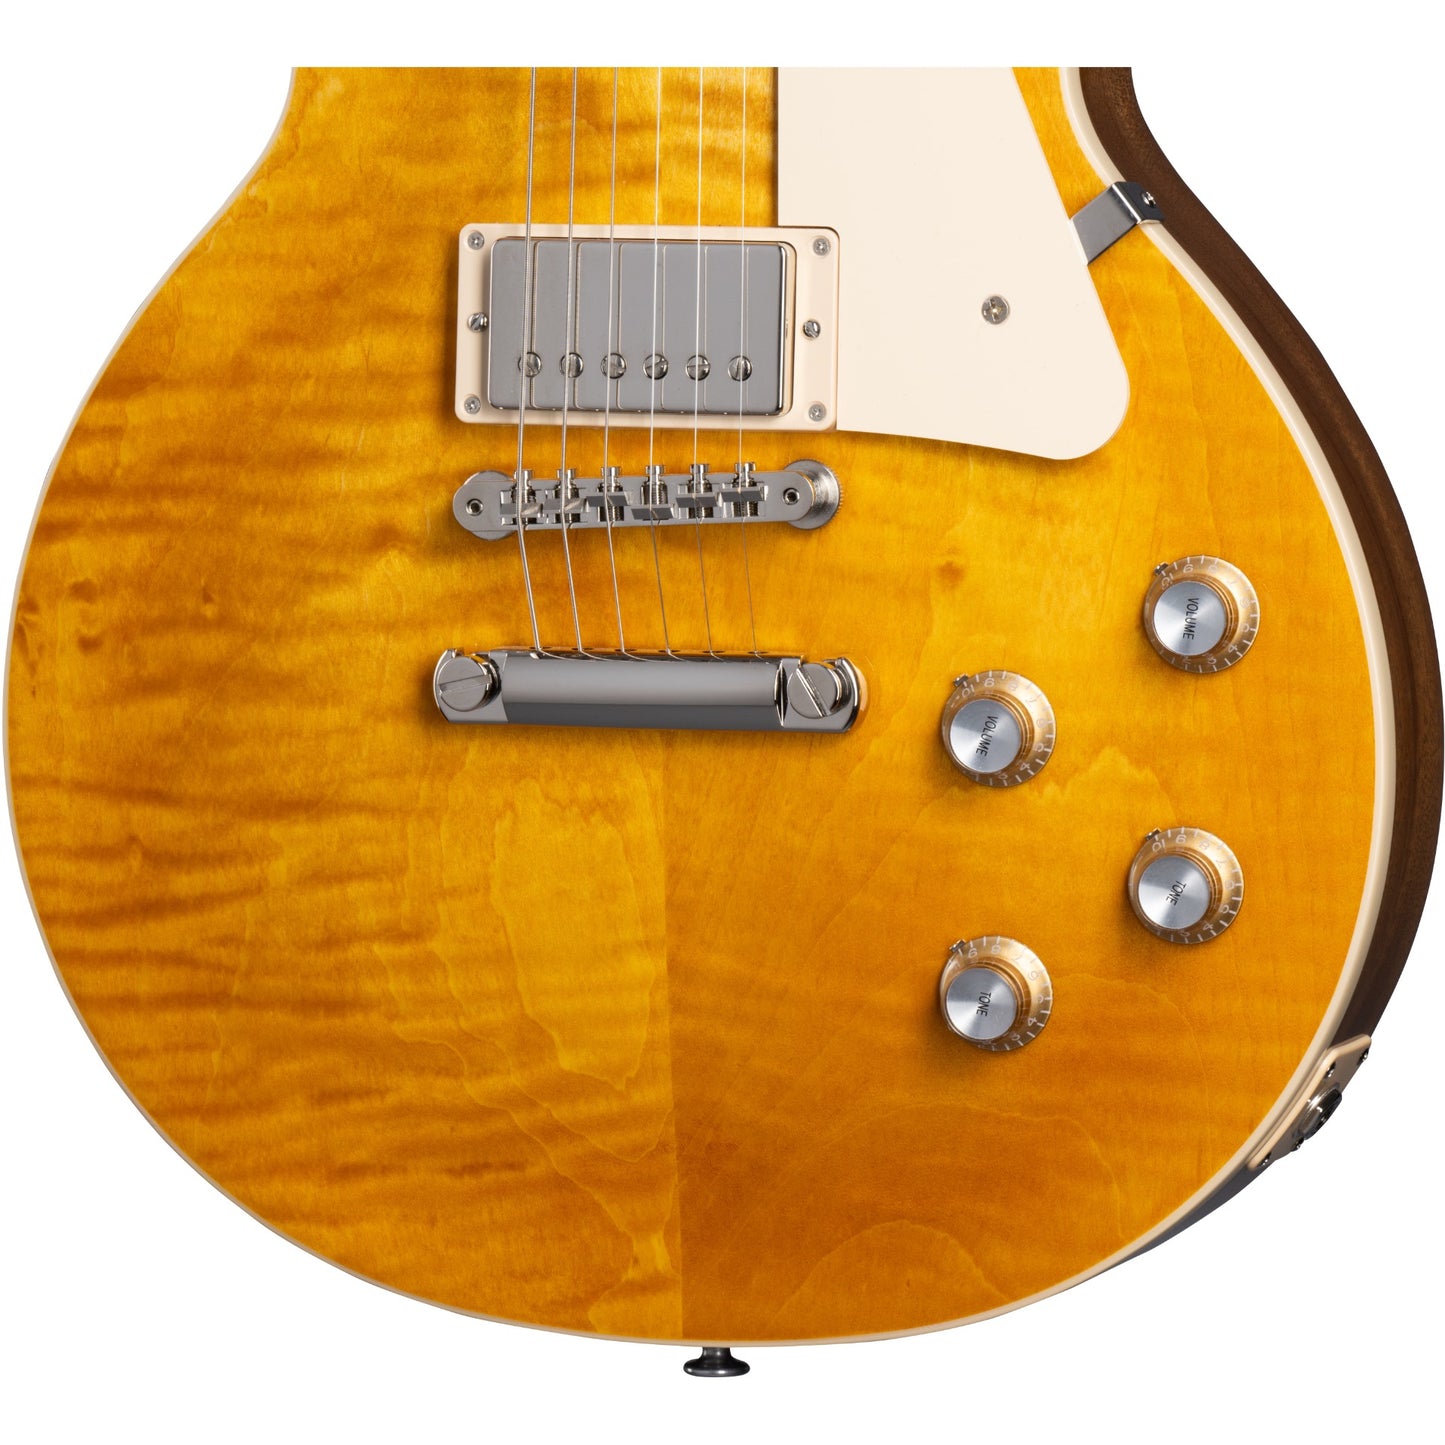 Gibson Les Paul Standard 60s Figured Top Electric Guitar - Honey Amber